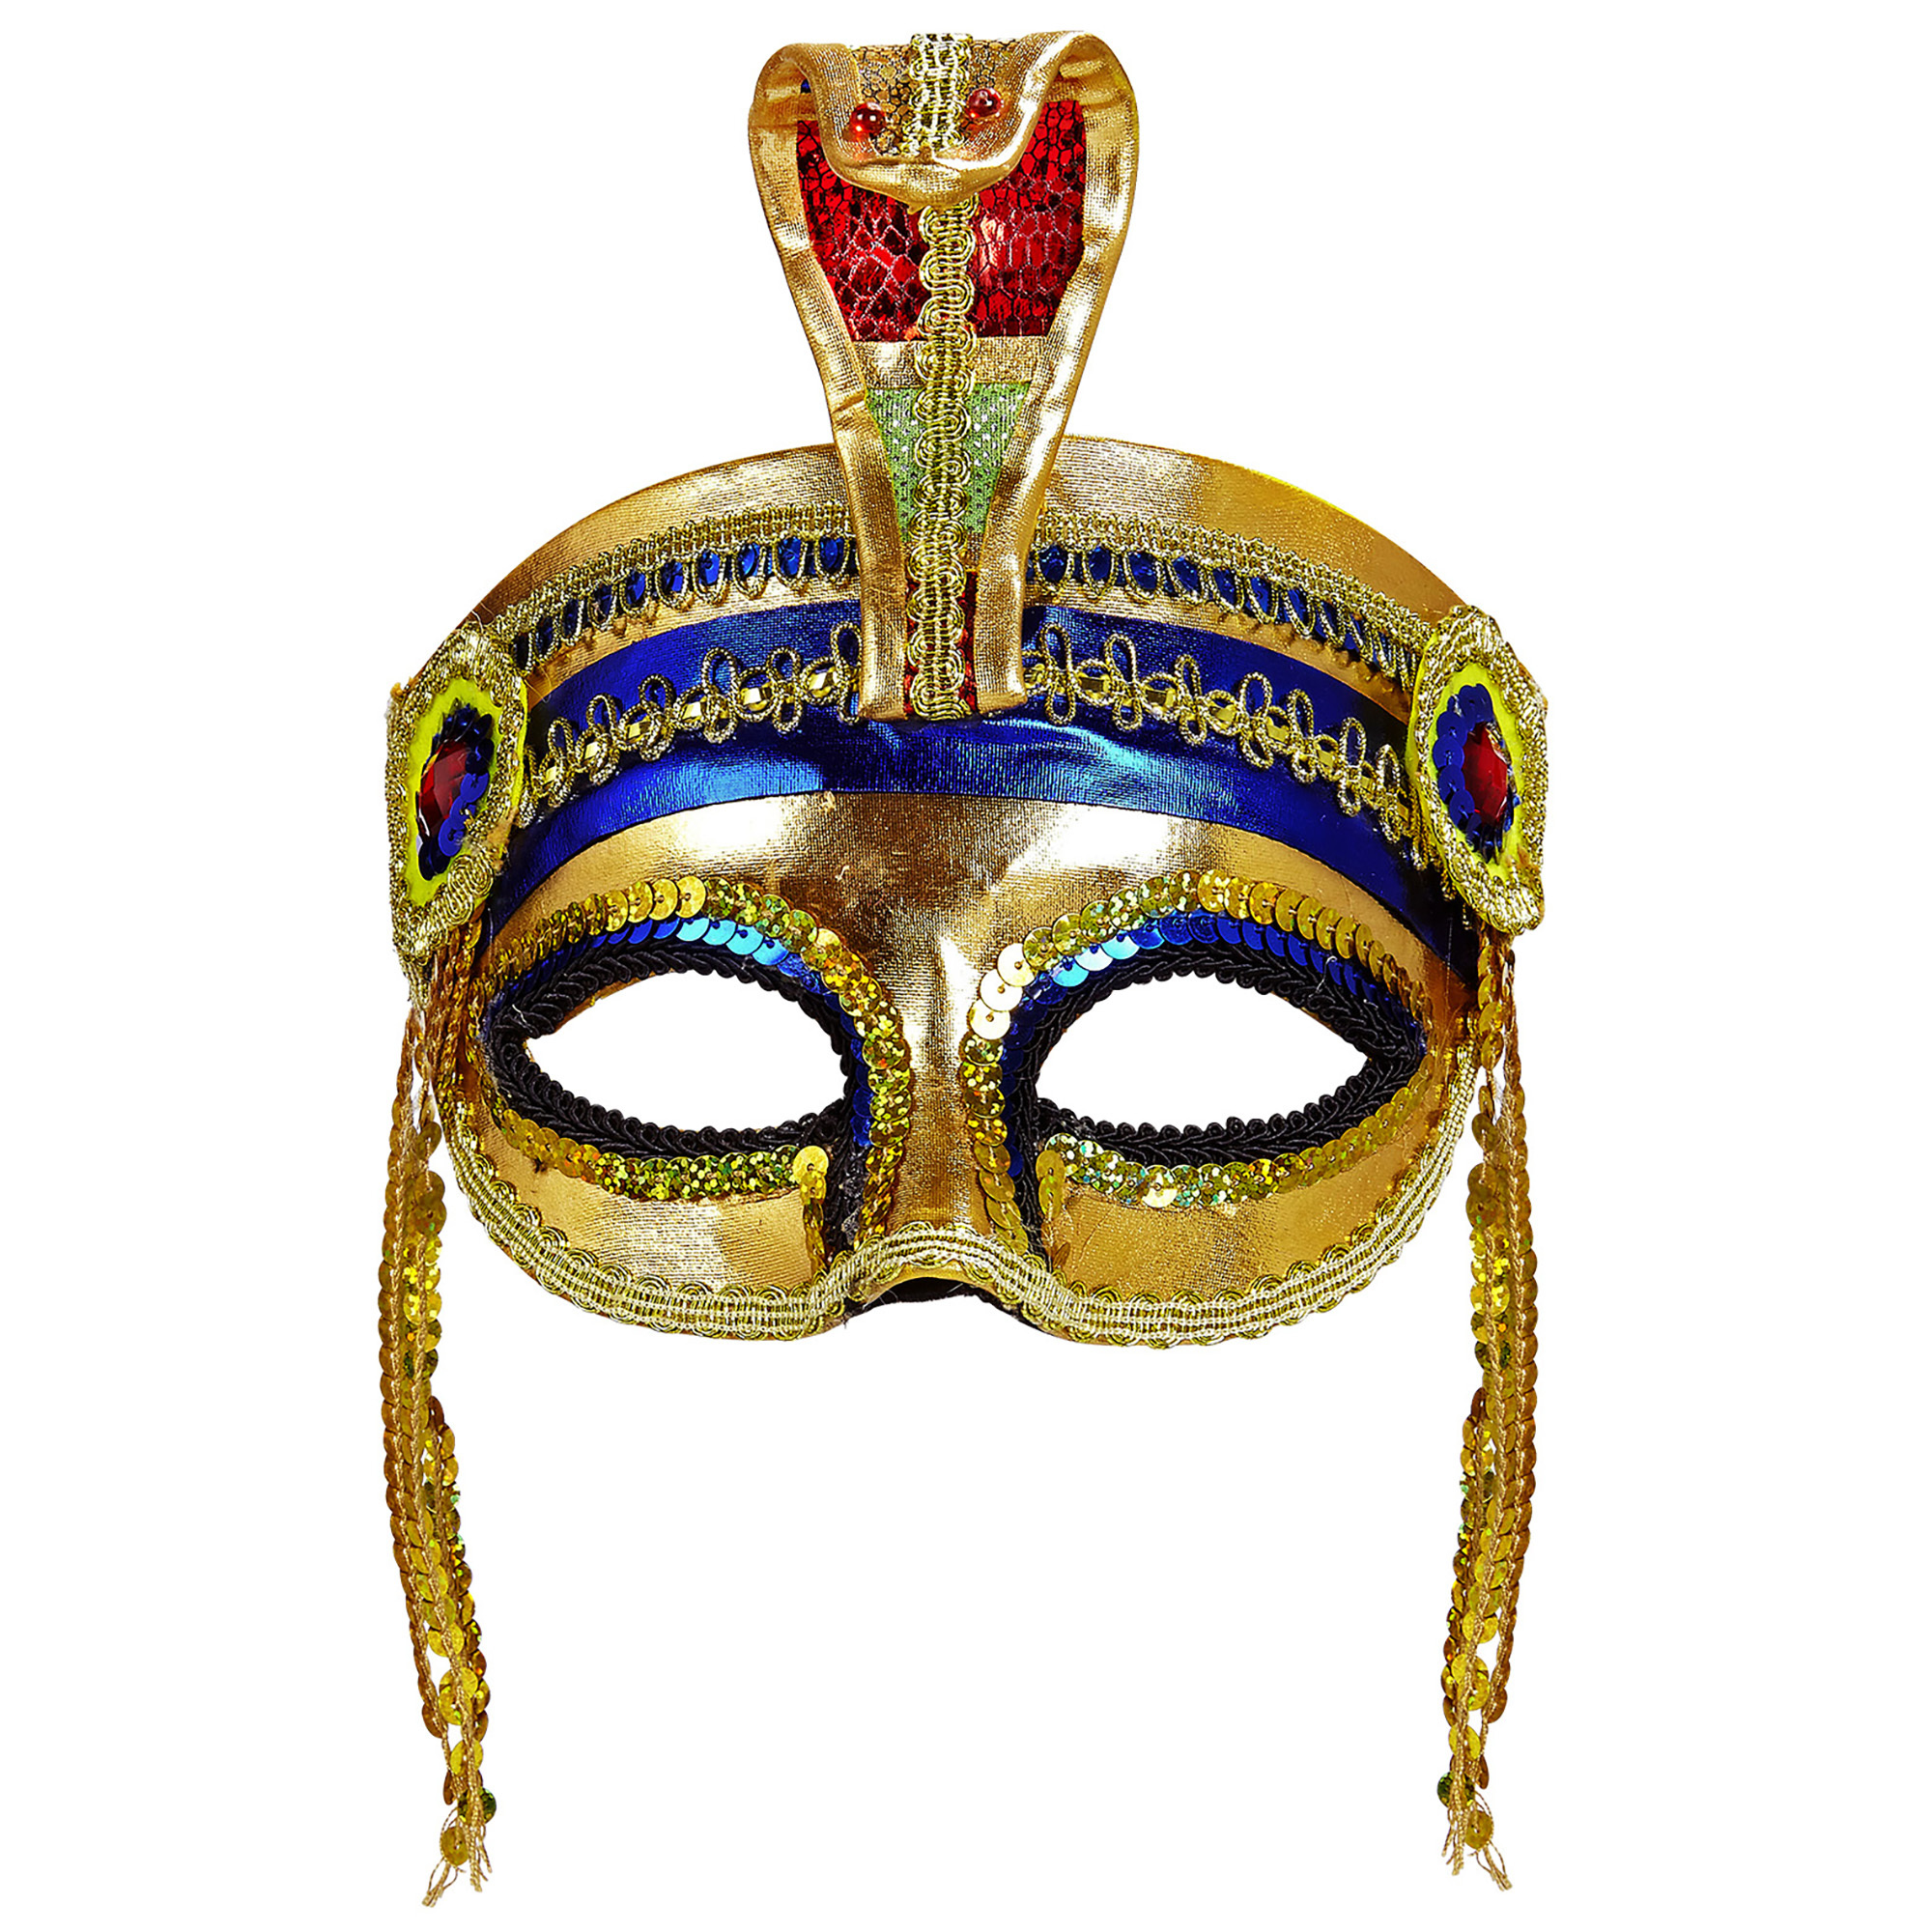 Egyptische farao masker kleurrijk